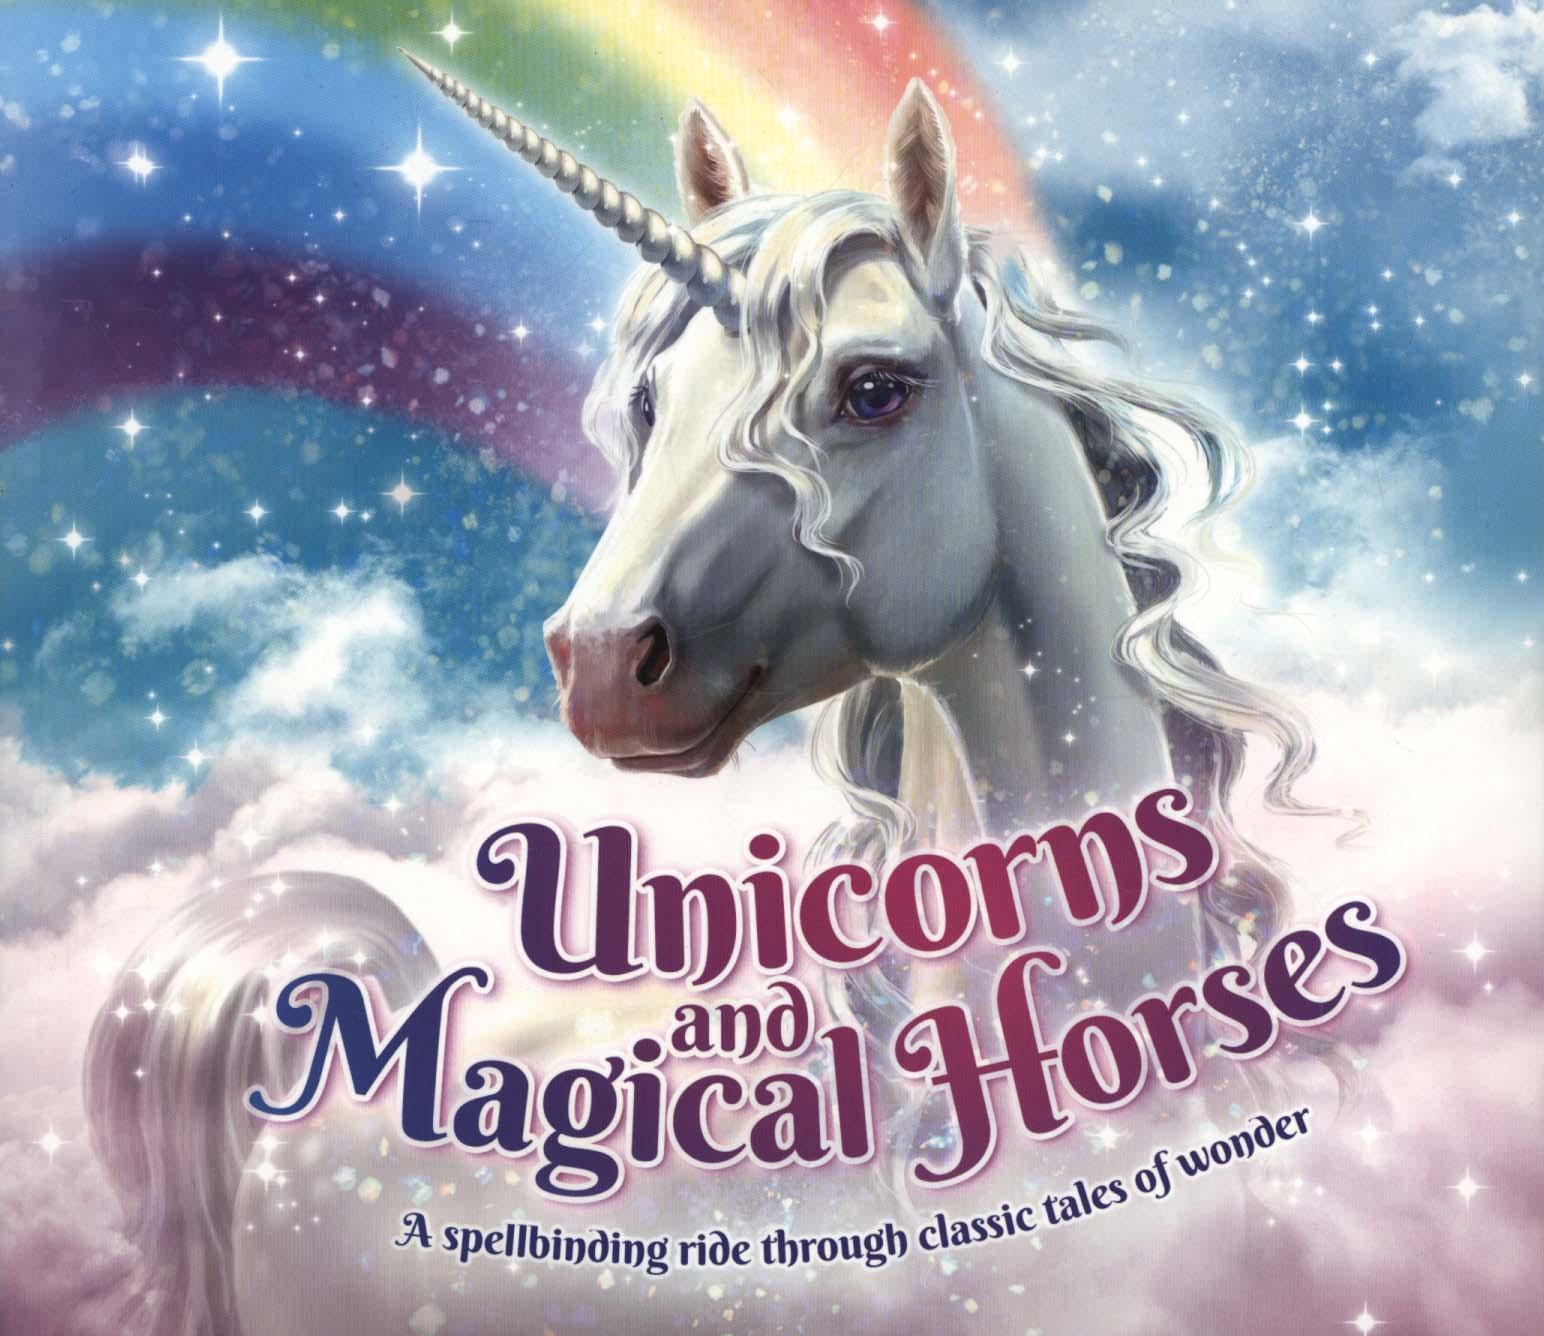 Unicorns and Magical Horses